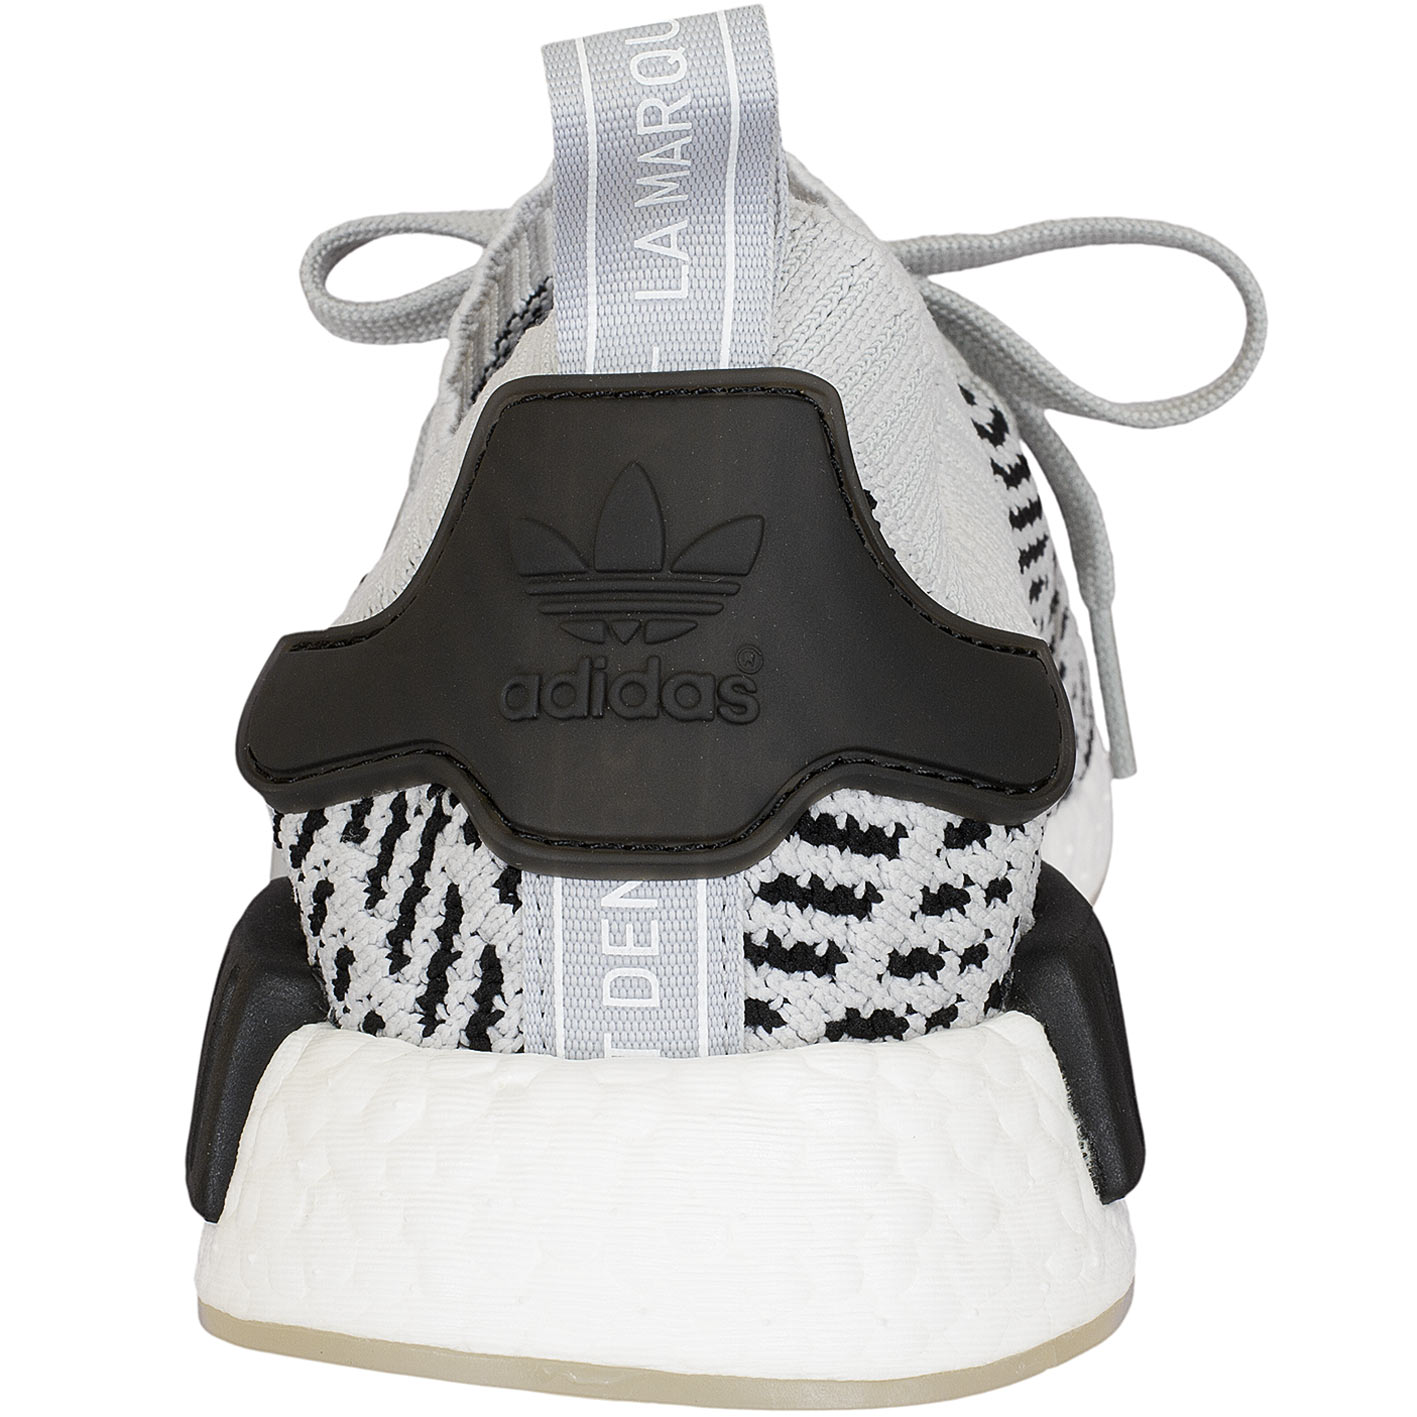 ☆ Sneaker Adidas NMD R1 STLT PK grau/schwarz - hier bestellen!